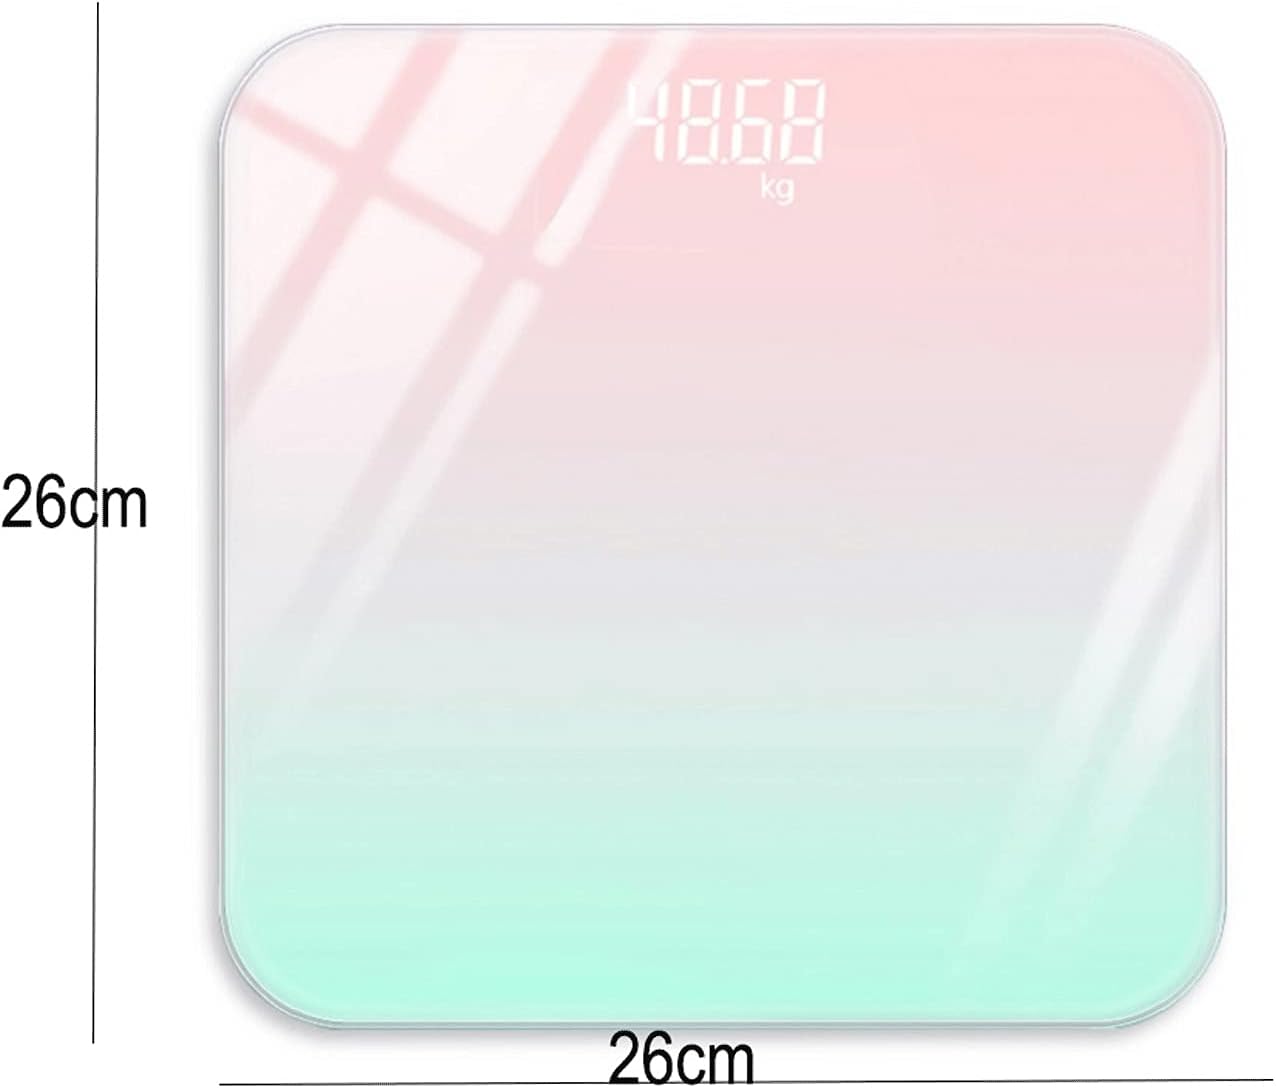 LED Display Bathroom Scales Gradient Colour